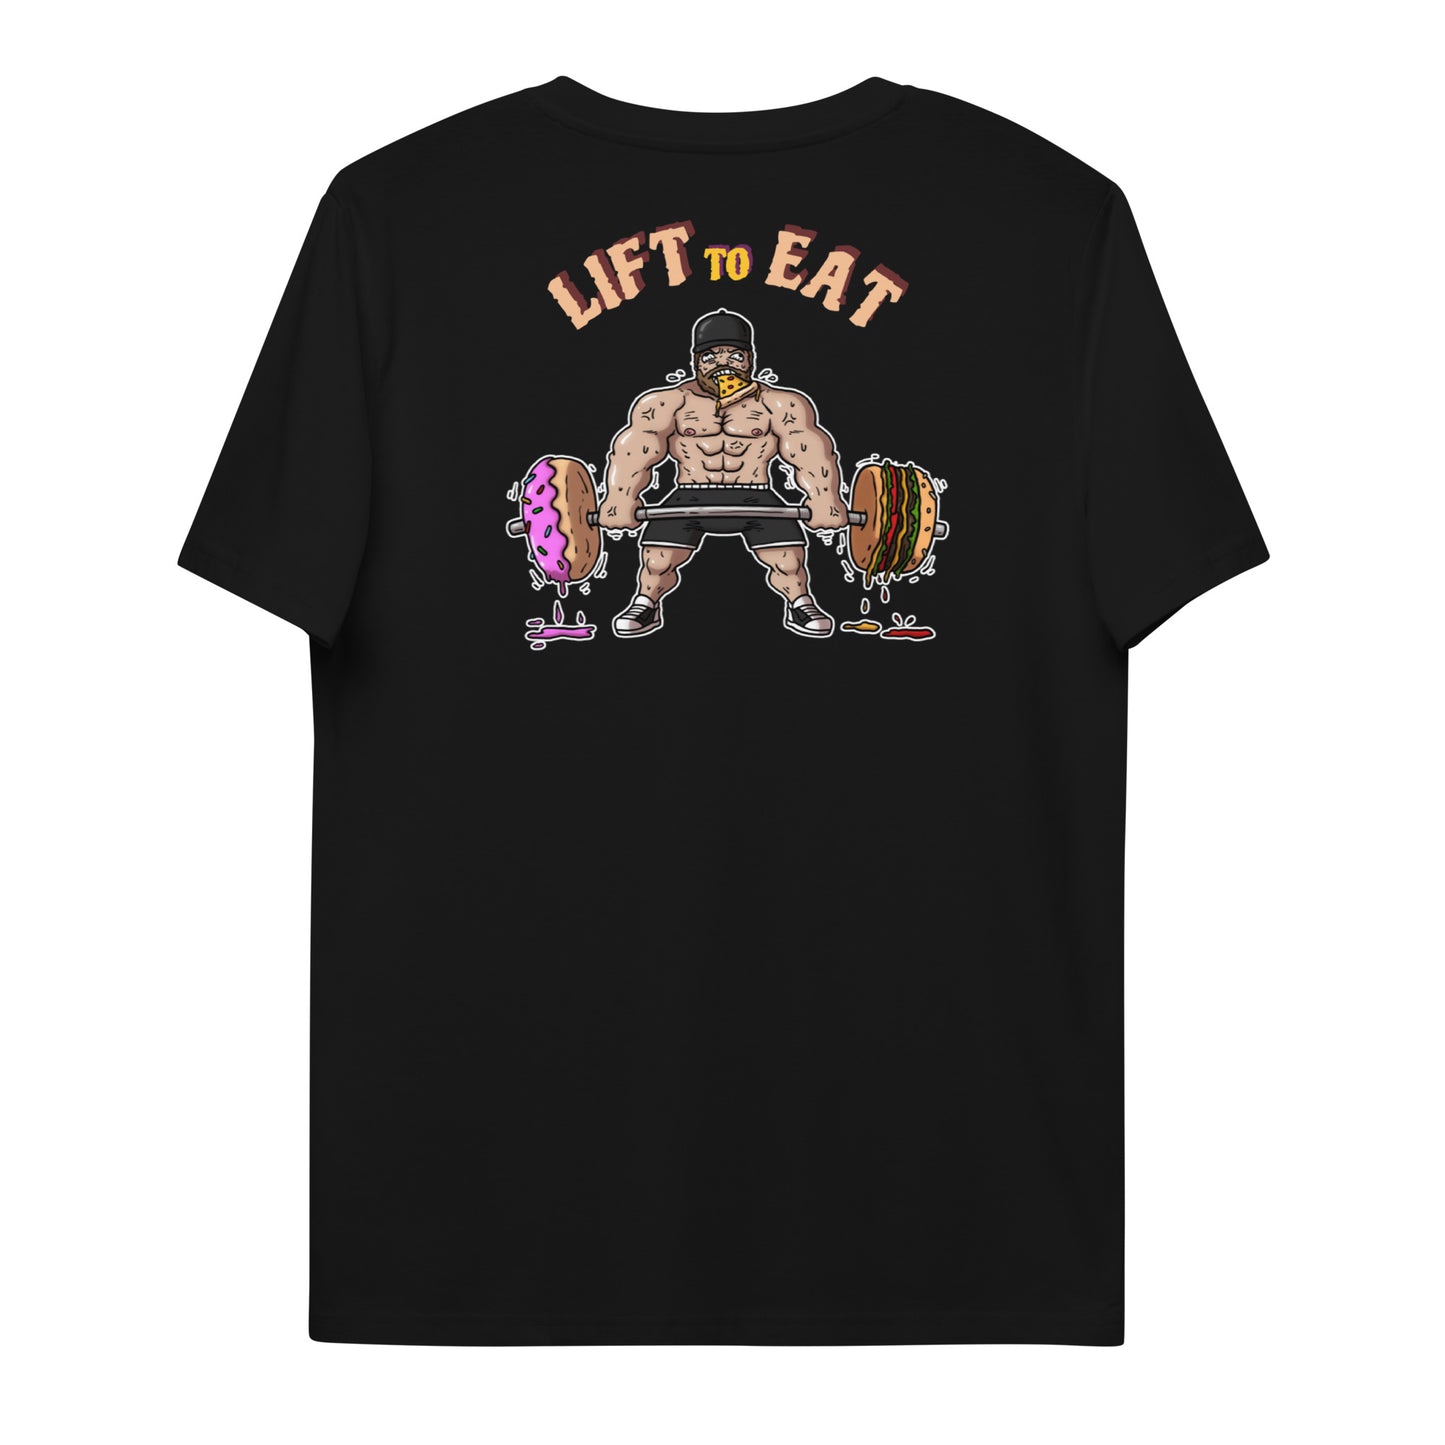 Lift to Eat shirt